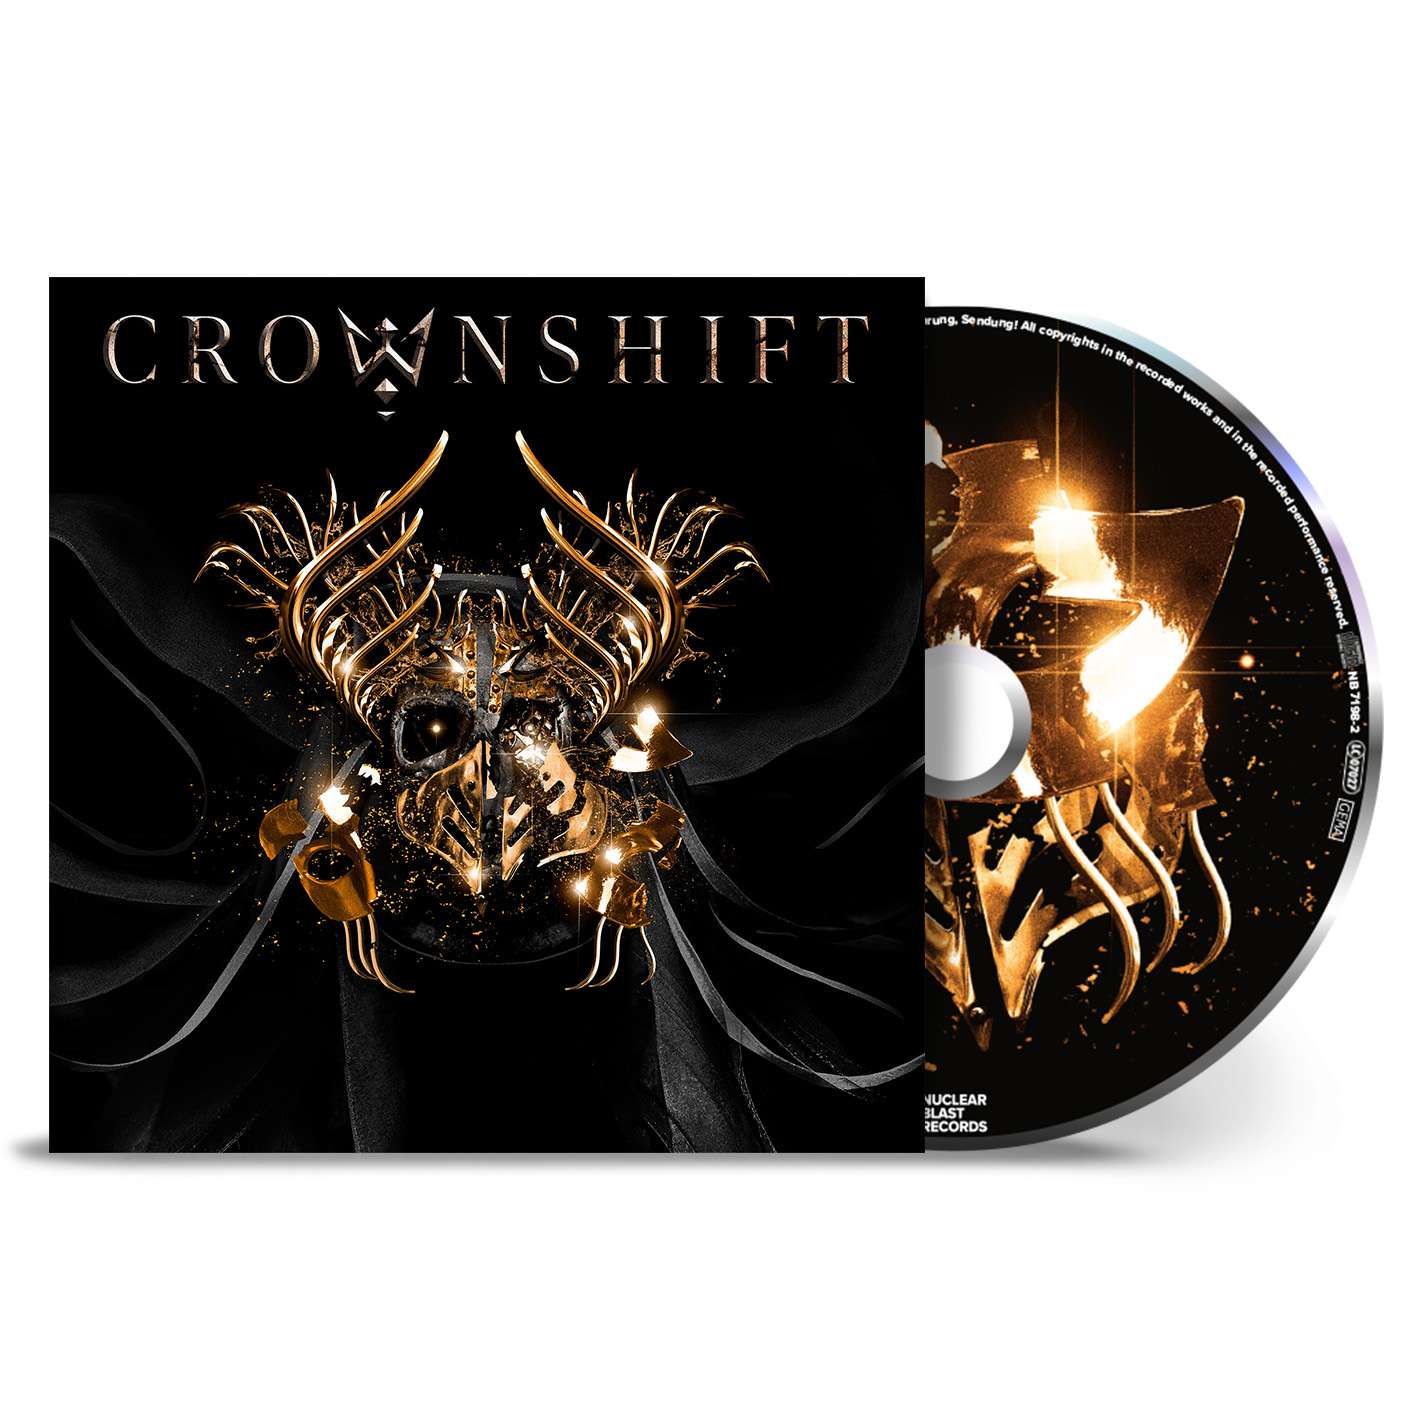 Crownshift "Crownshift" CD